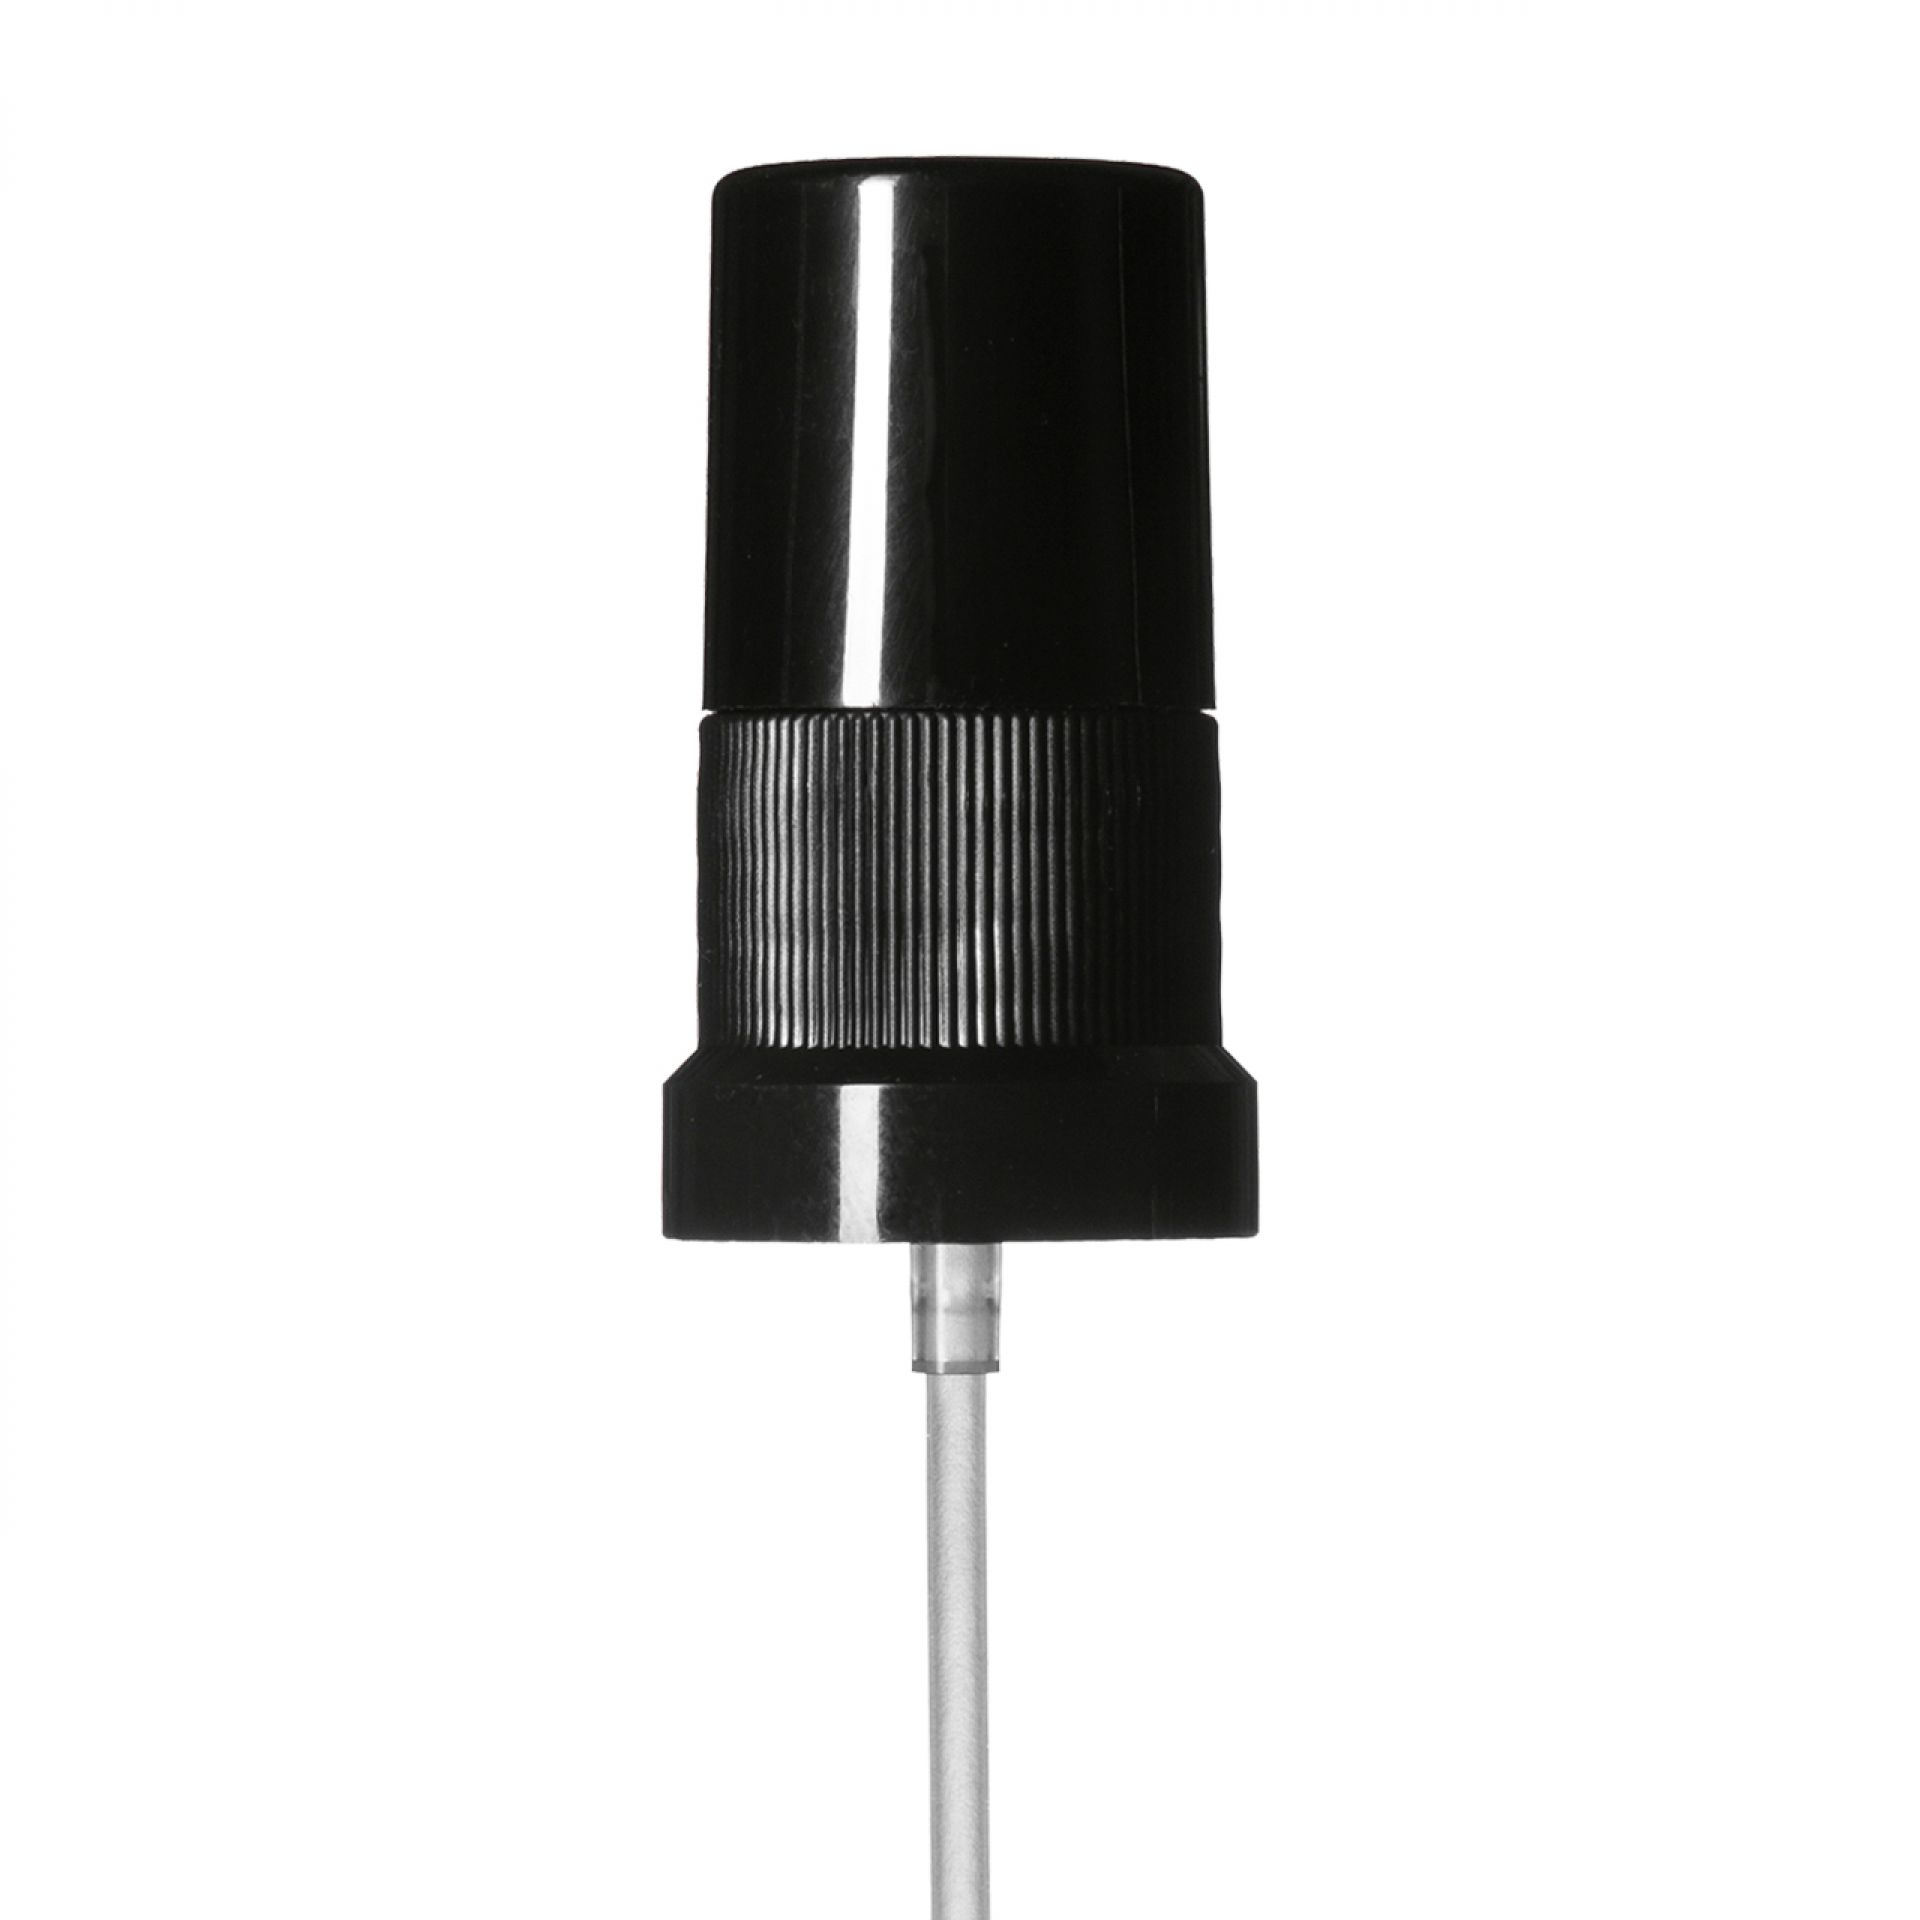 Mist sprayer Classic, DIN18, PP, black, ribbed, dose 0.10ml, black overcap (Orion 10-70)  